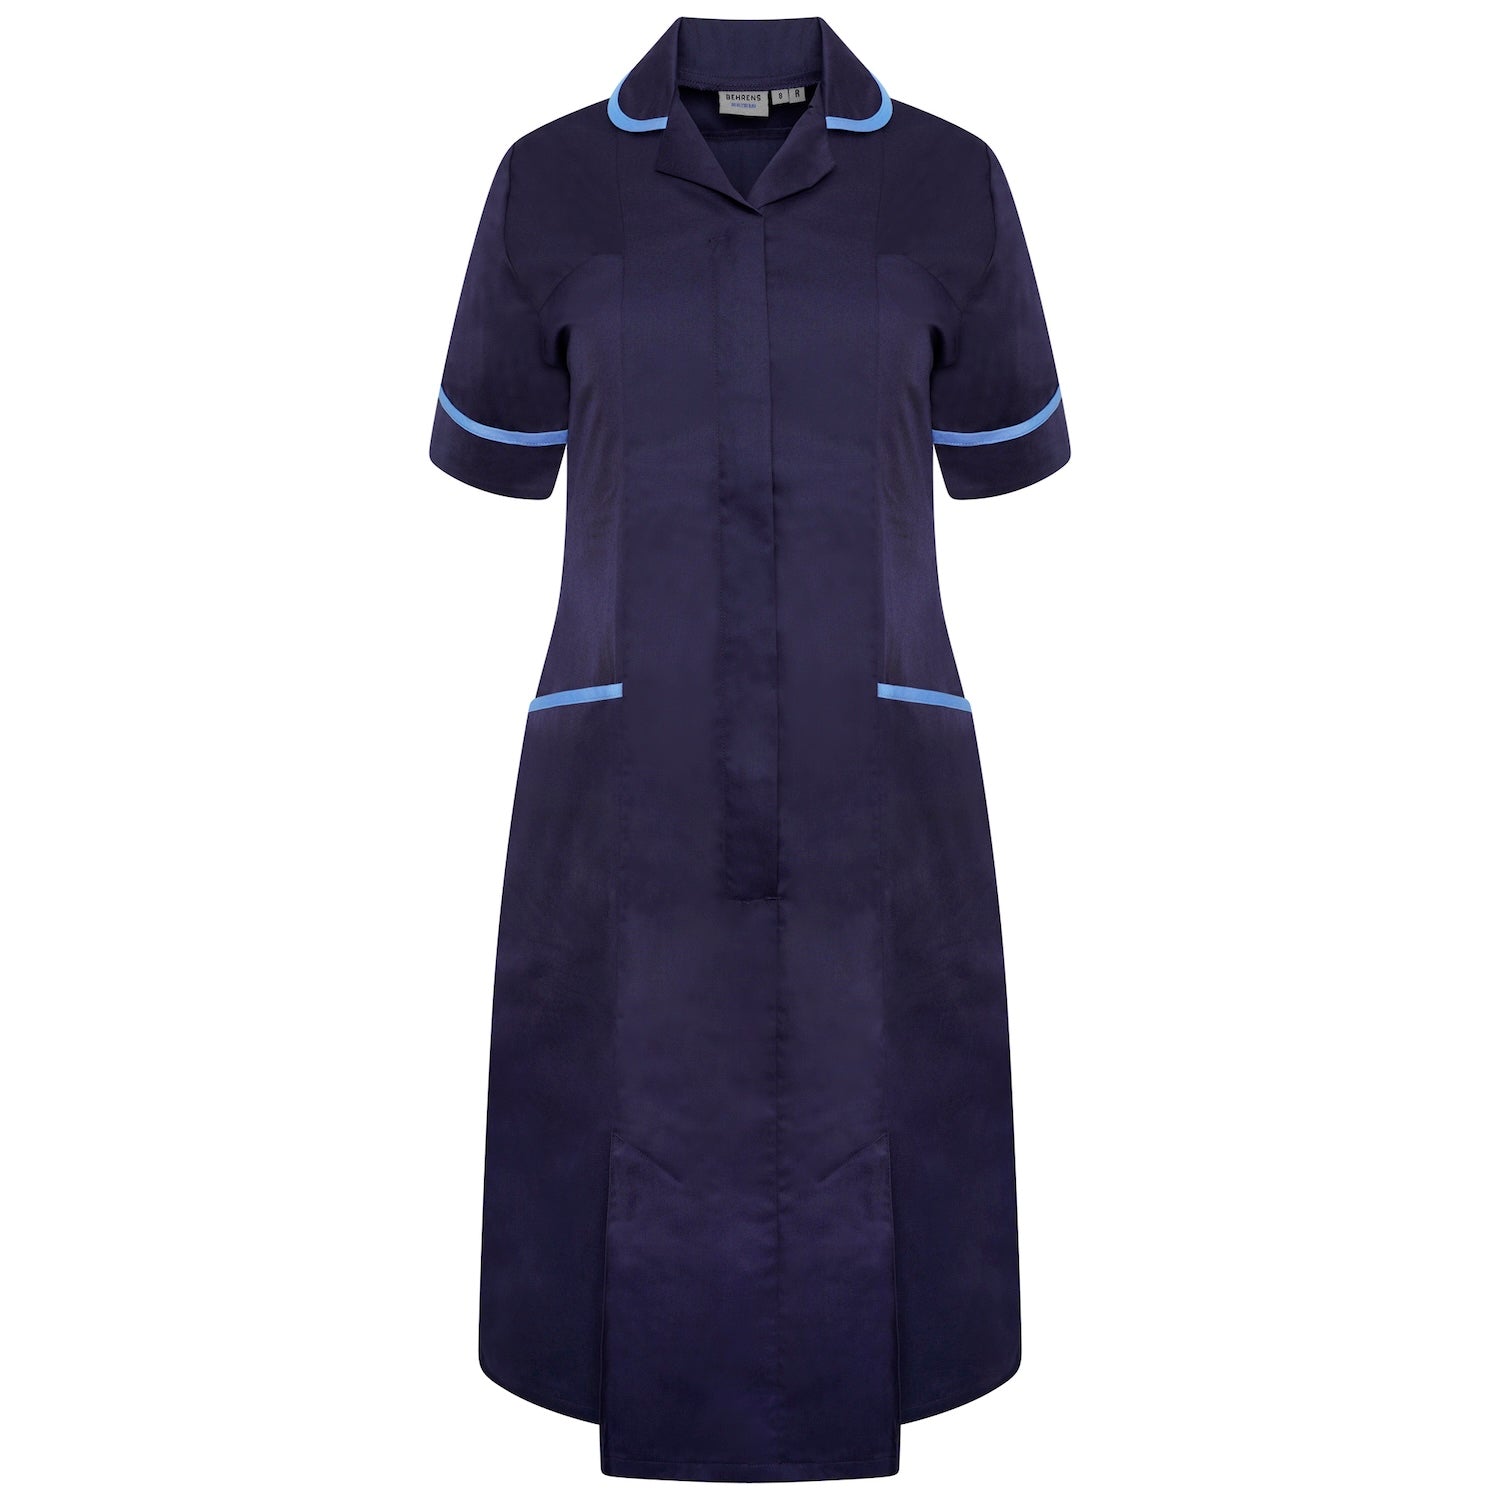 Ladies Healthcare Dress | Round Collar | Navy/Hospital Blue Trim